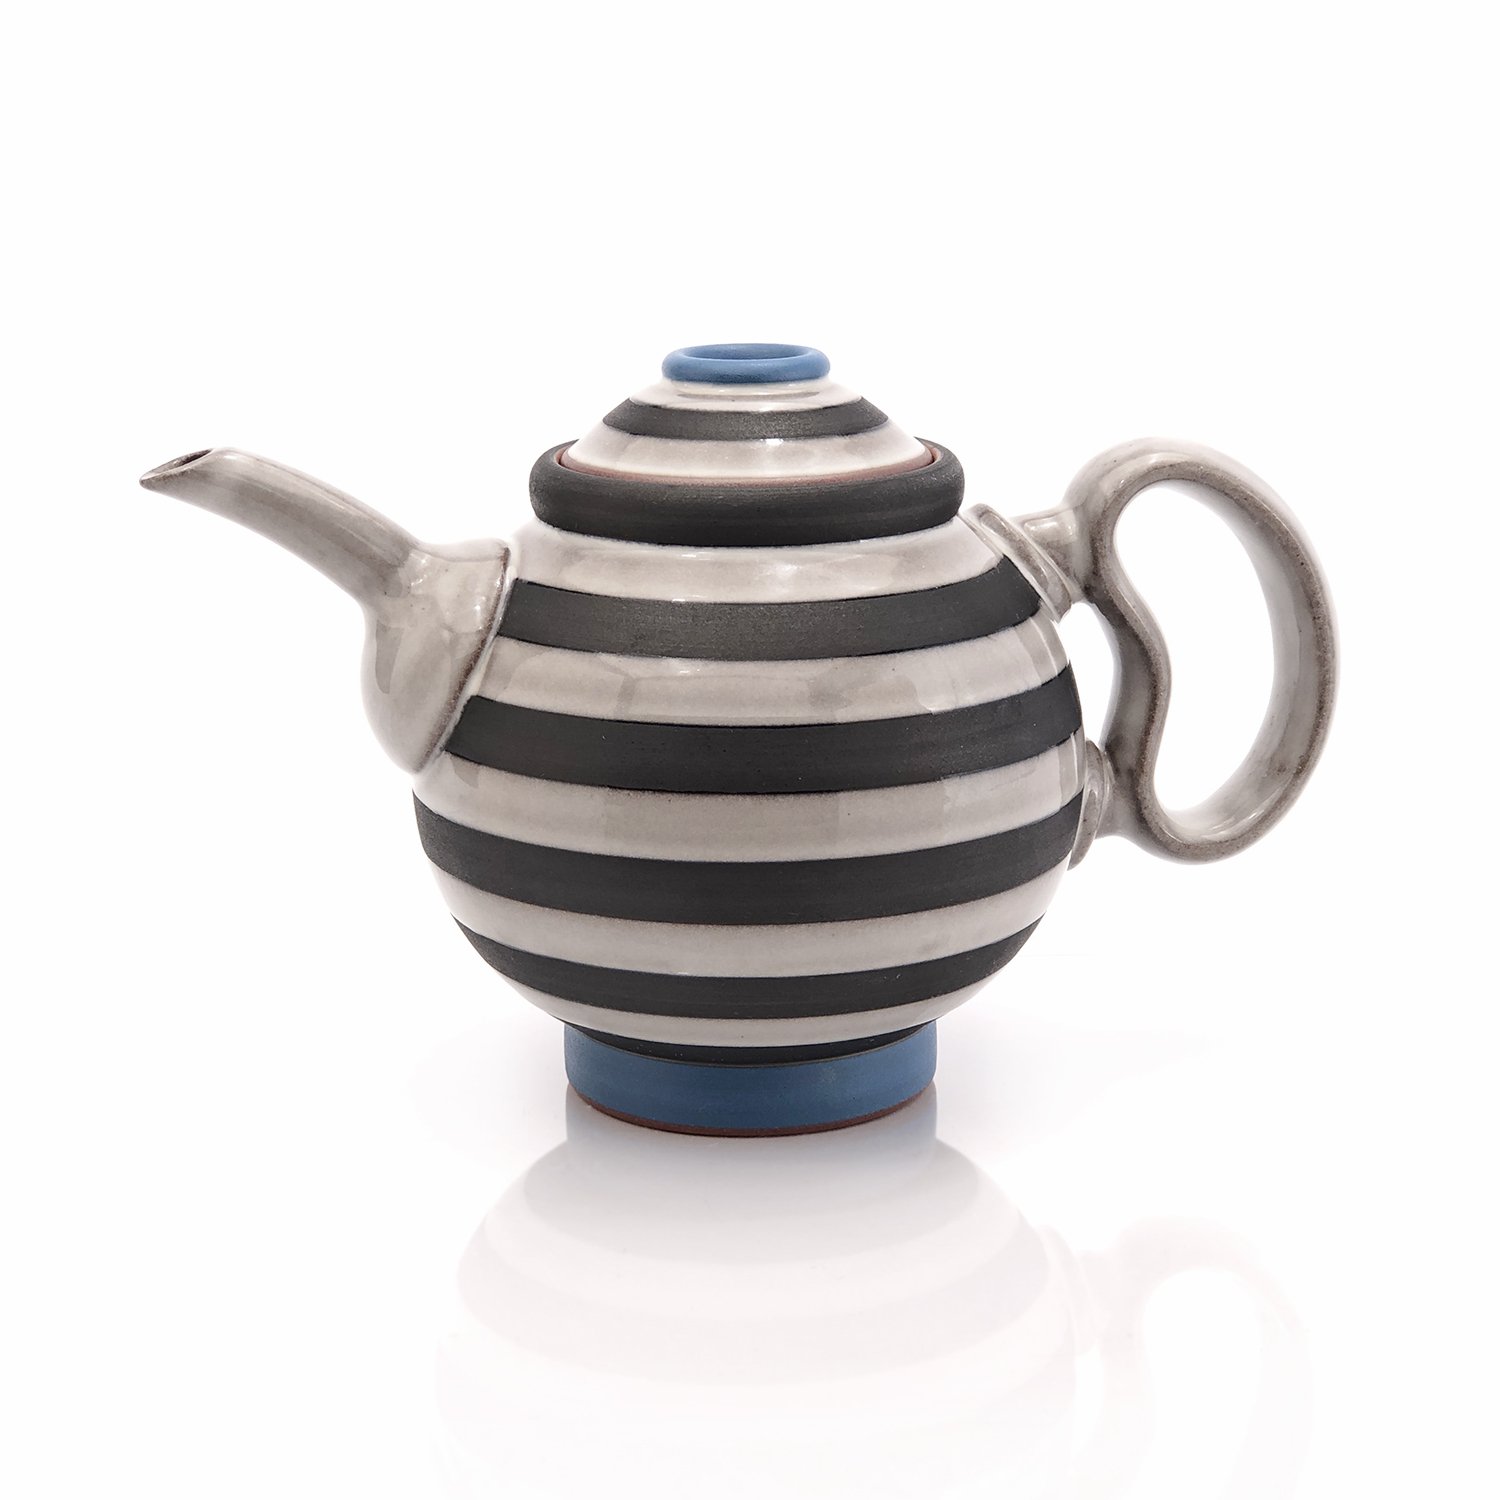 Black and white striped teapot